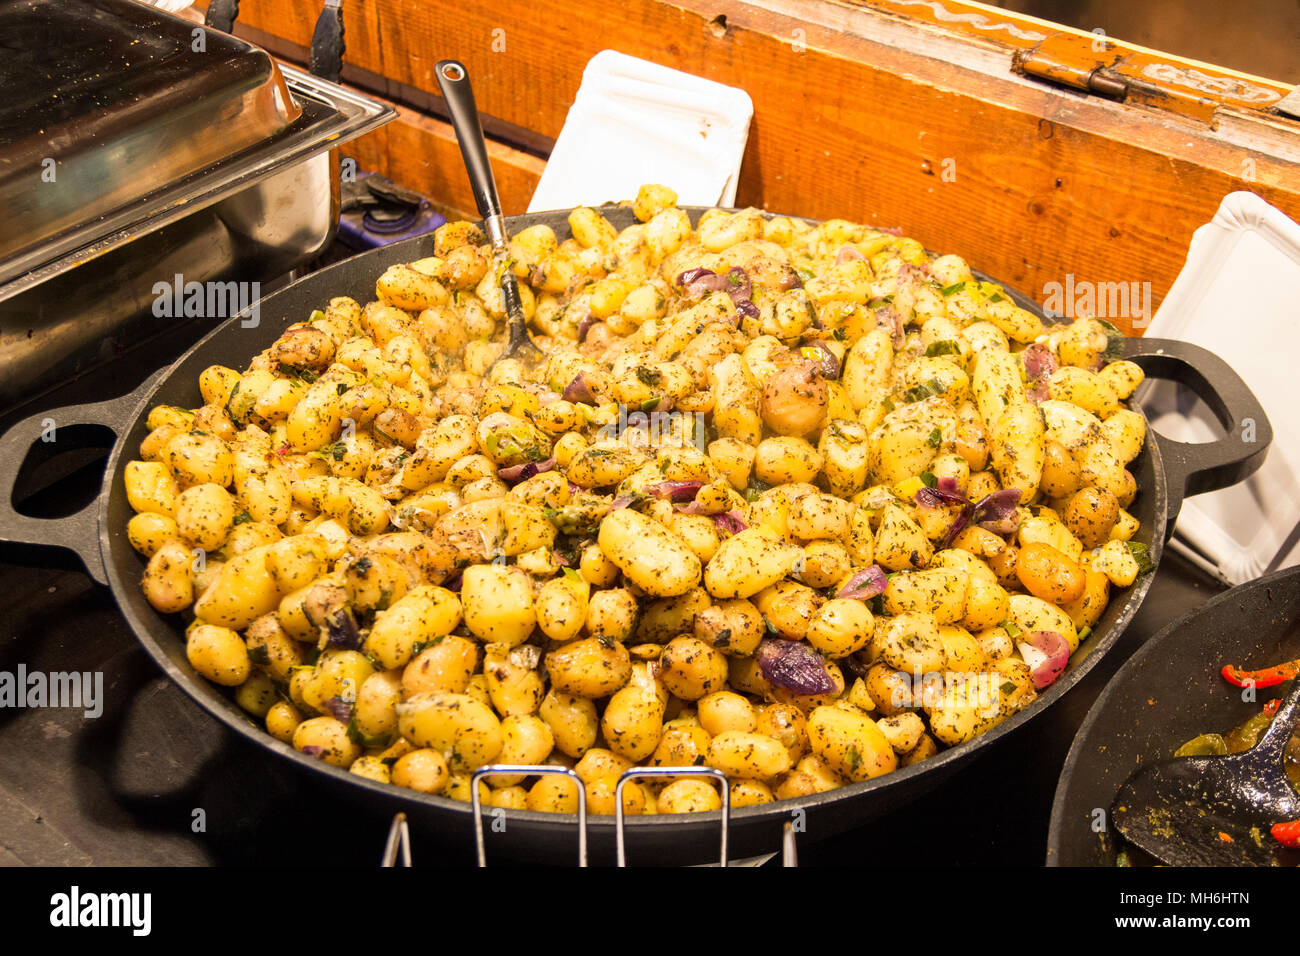 Prague Street Food. Steamed Meat and Vegetables, Czech republic. Street food at Prague market. Stock Photo